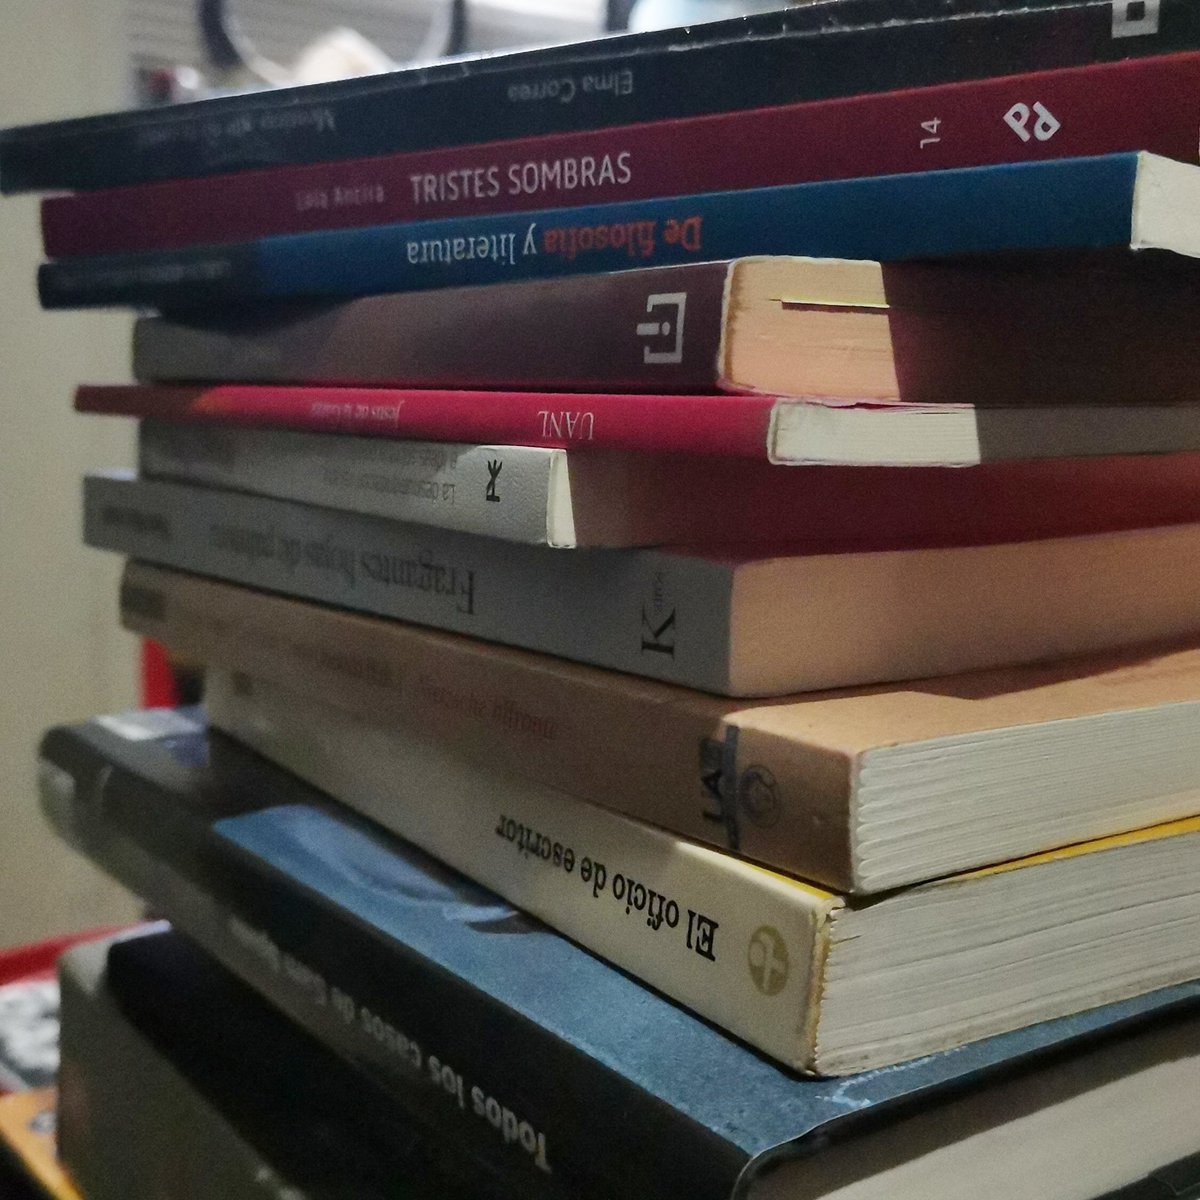 Montoncito de libros después de la FIL. 📖👀 Algo leve 😅😂
#libros #cultura #filuabc